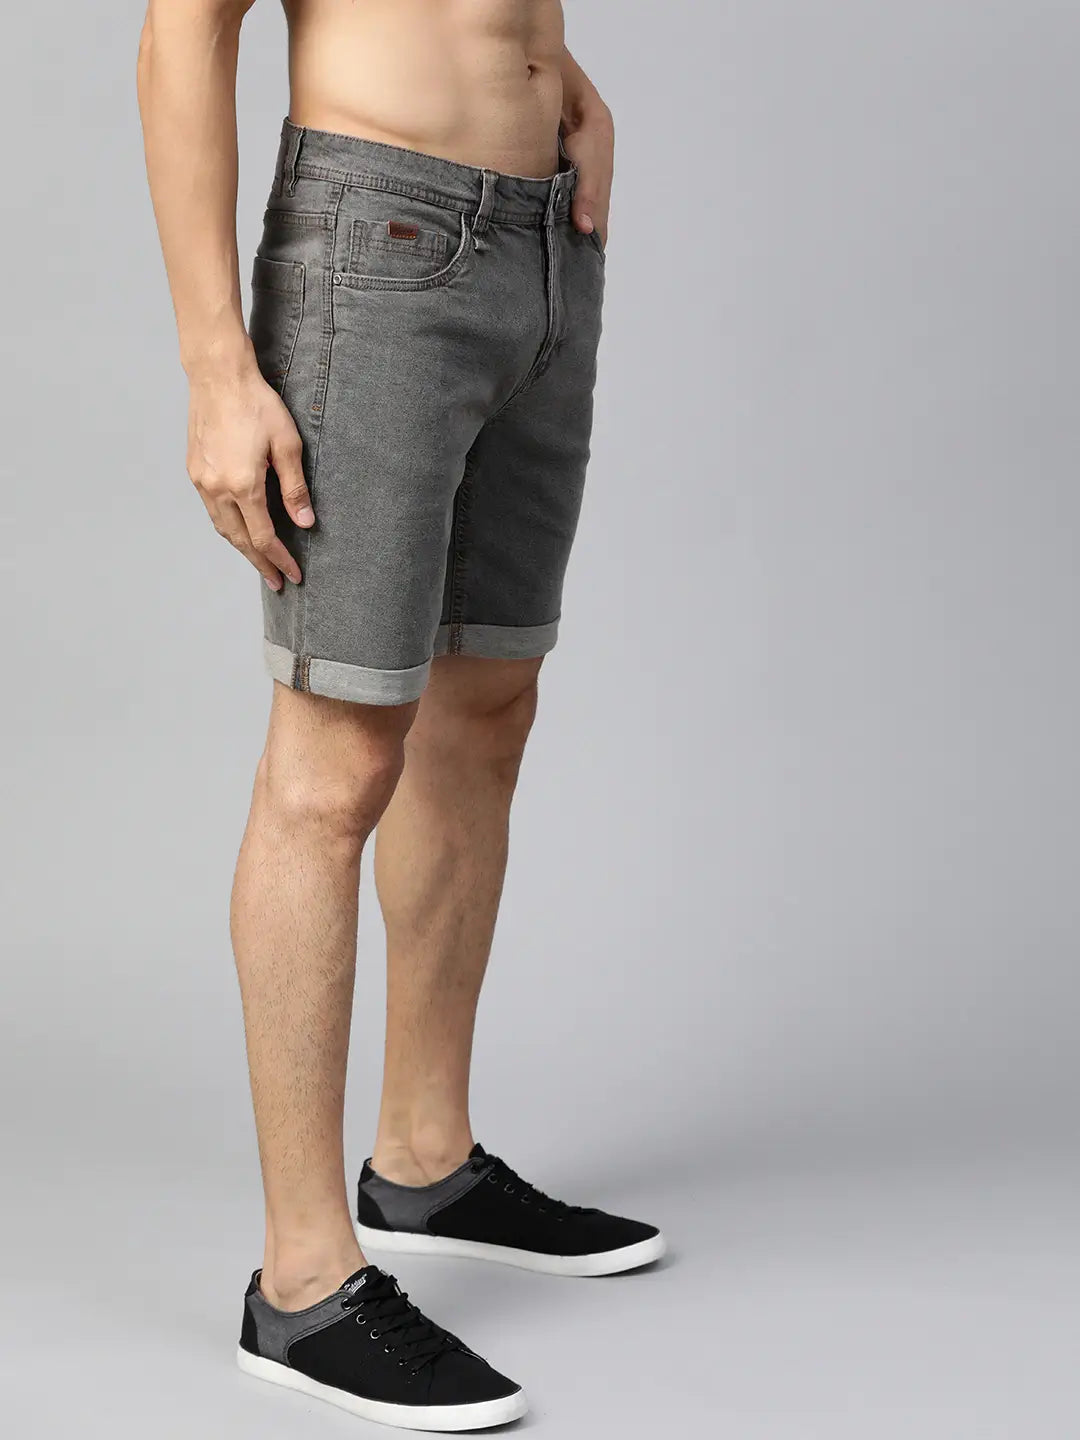 Men Charcoal Grey Washed Regular Fit Denim Shorts - Back View - AceCart